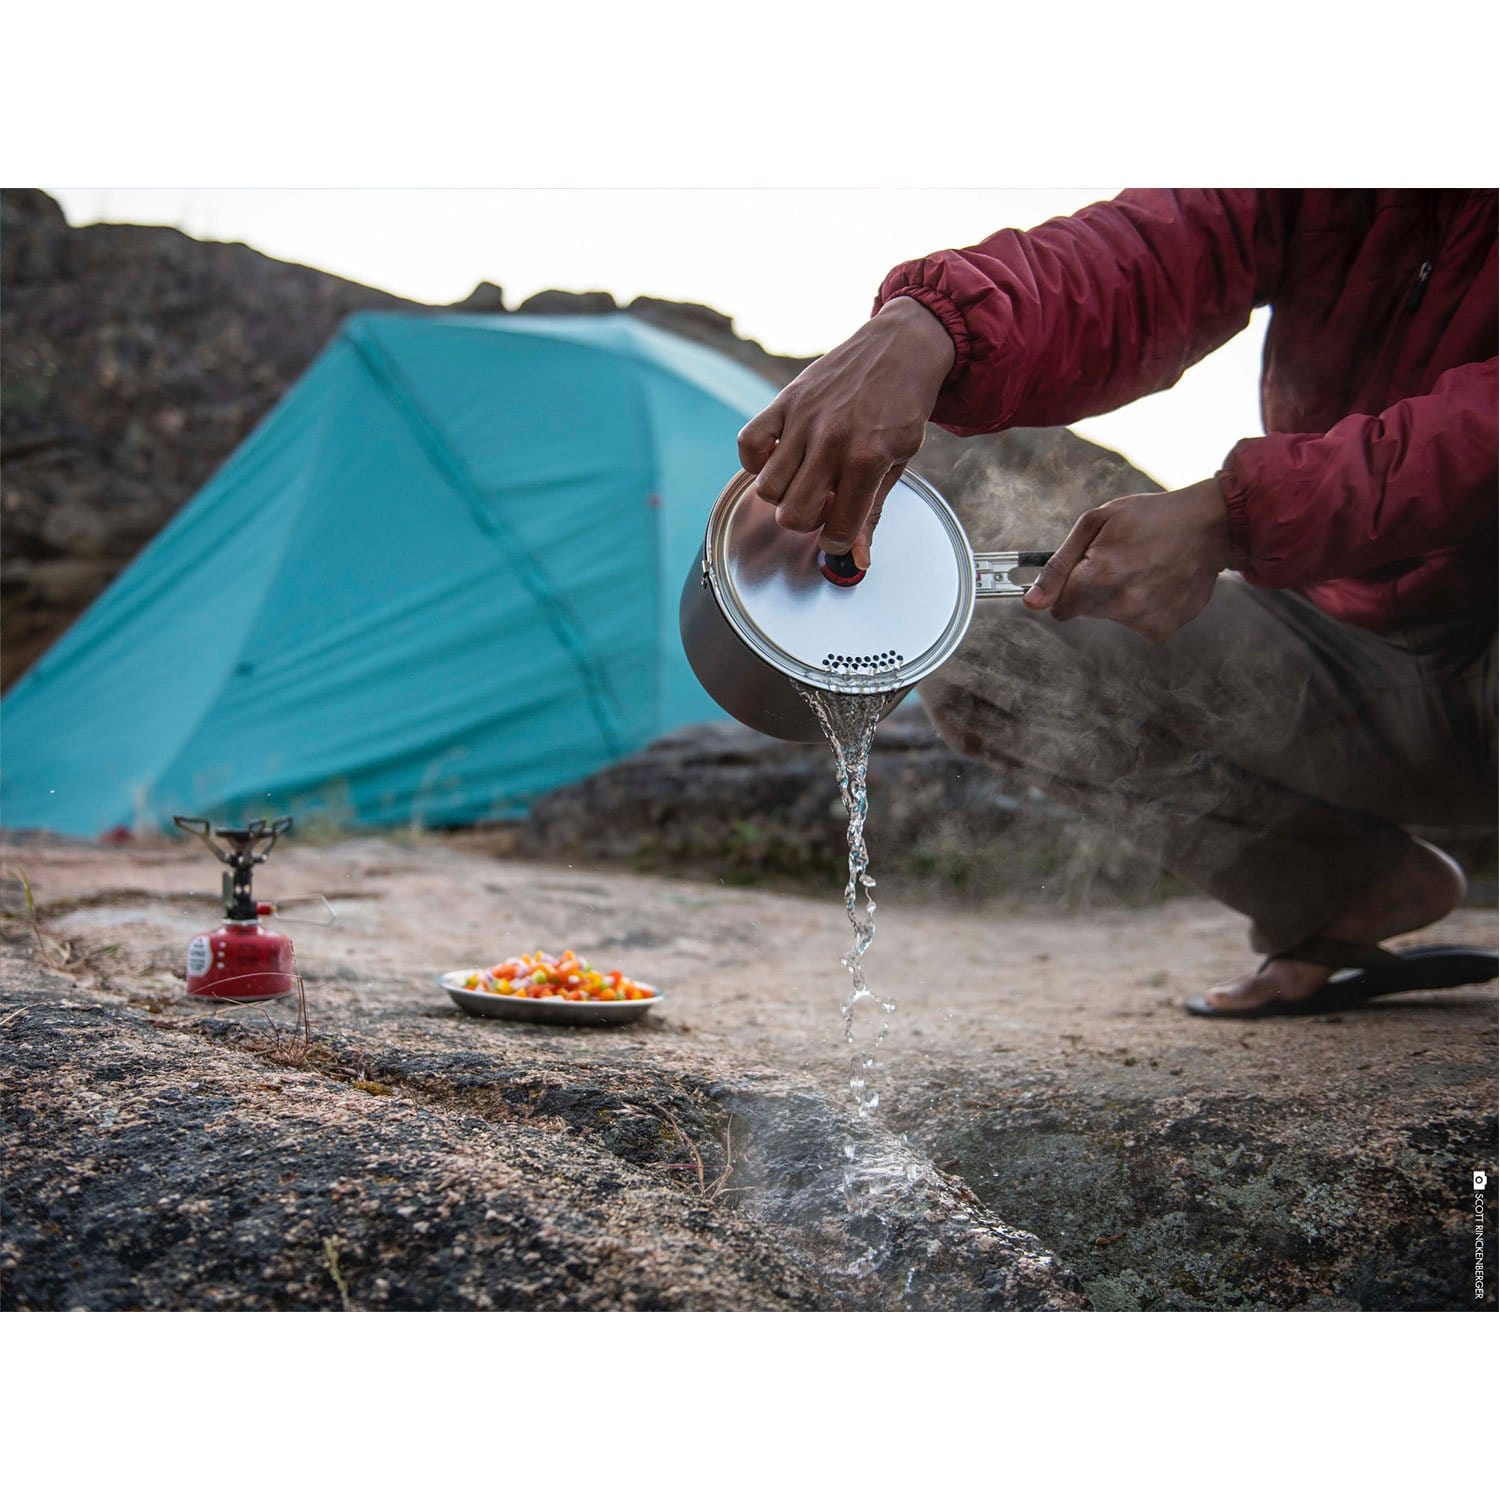 Ceramic 2.5 Liter Pot, Nonstick Camping Cook Pot